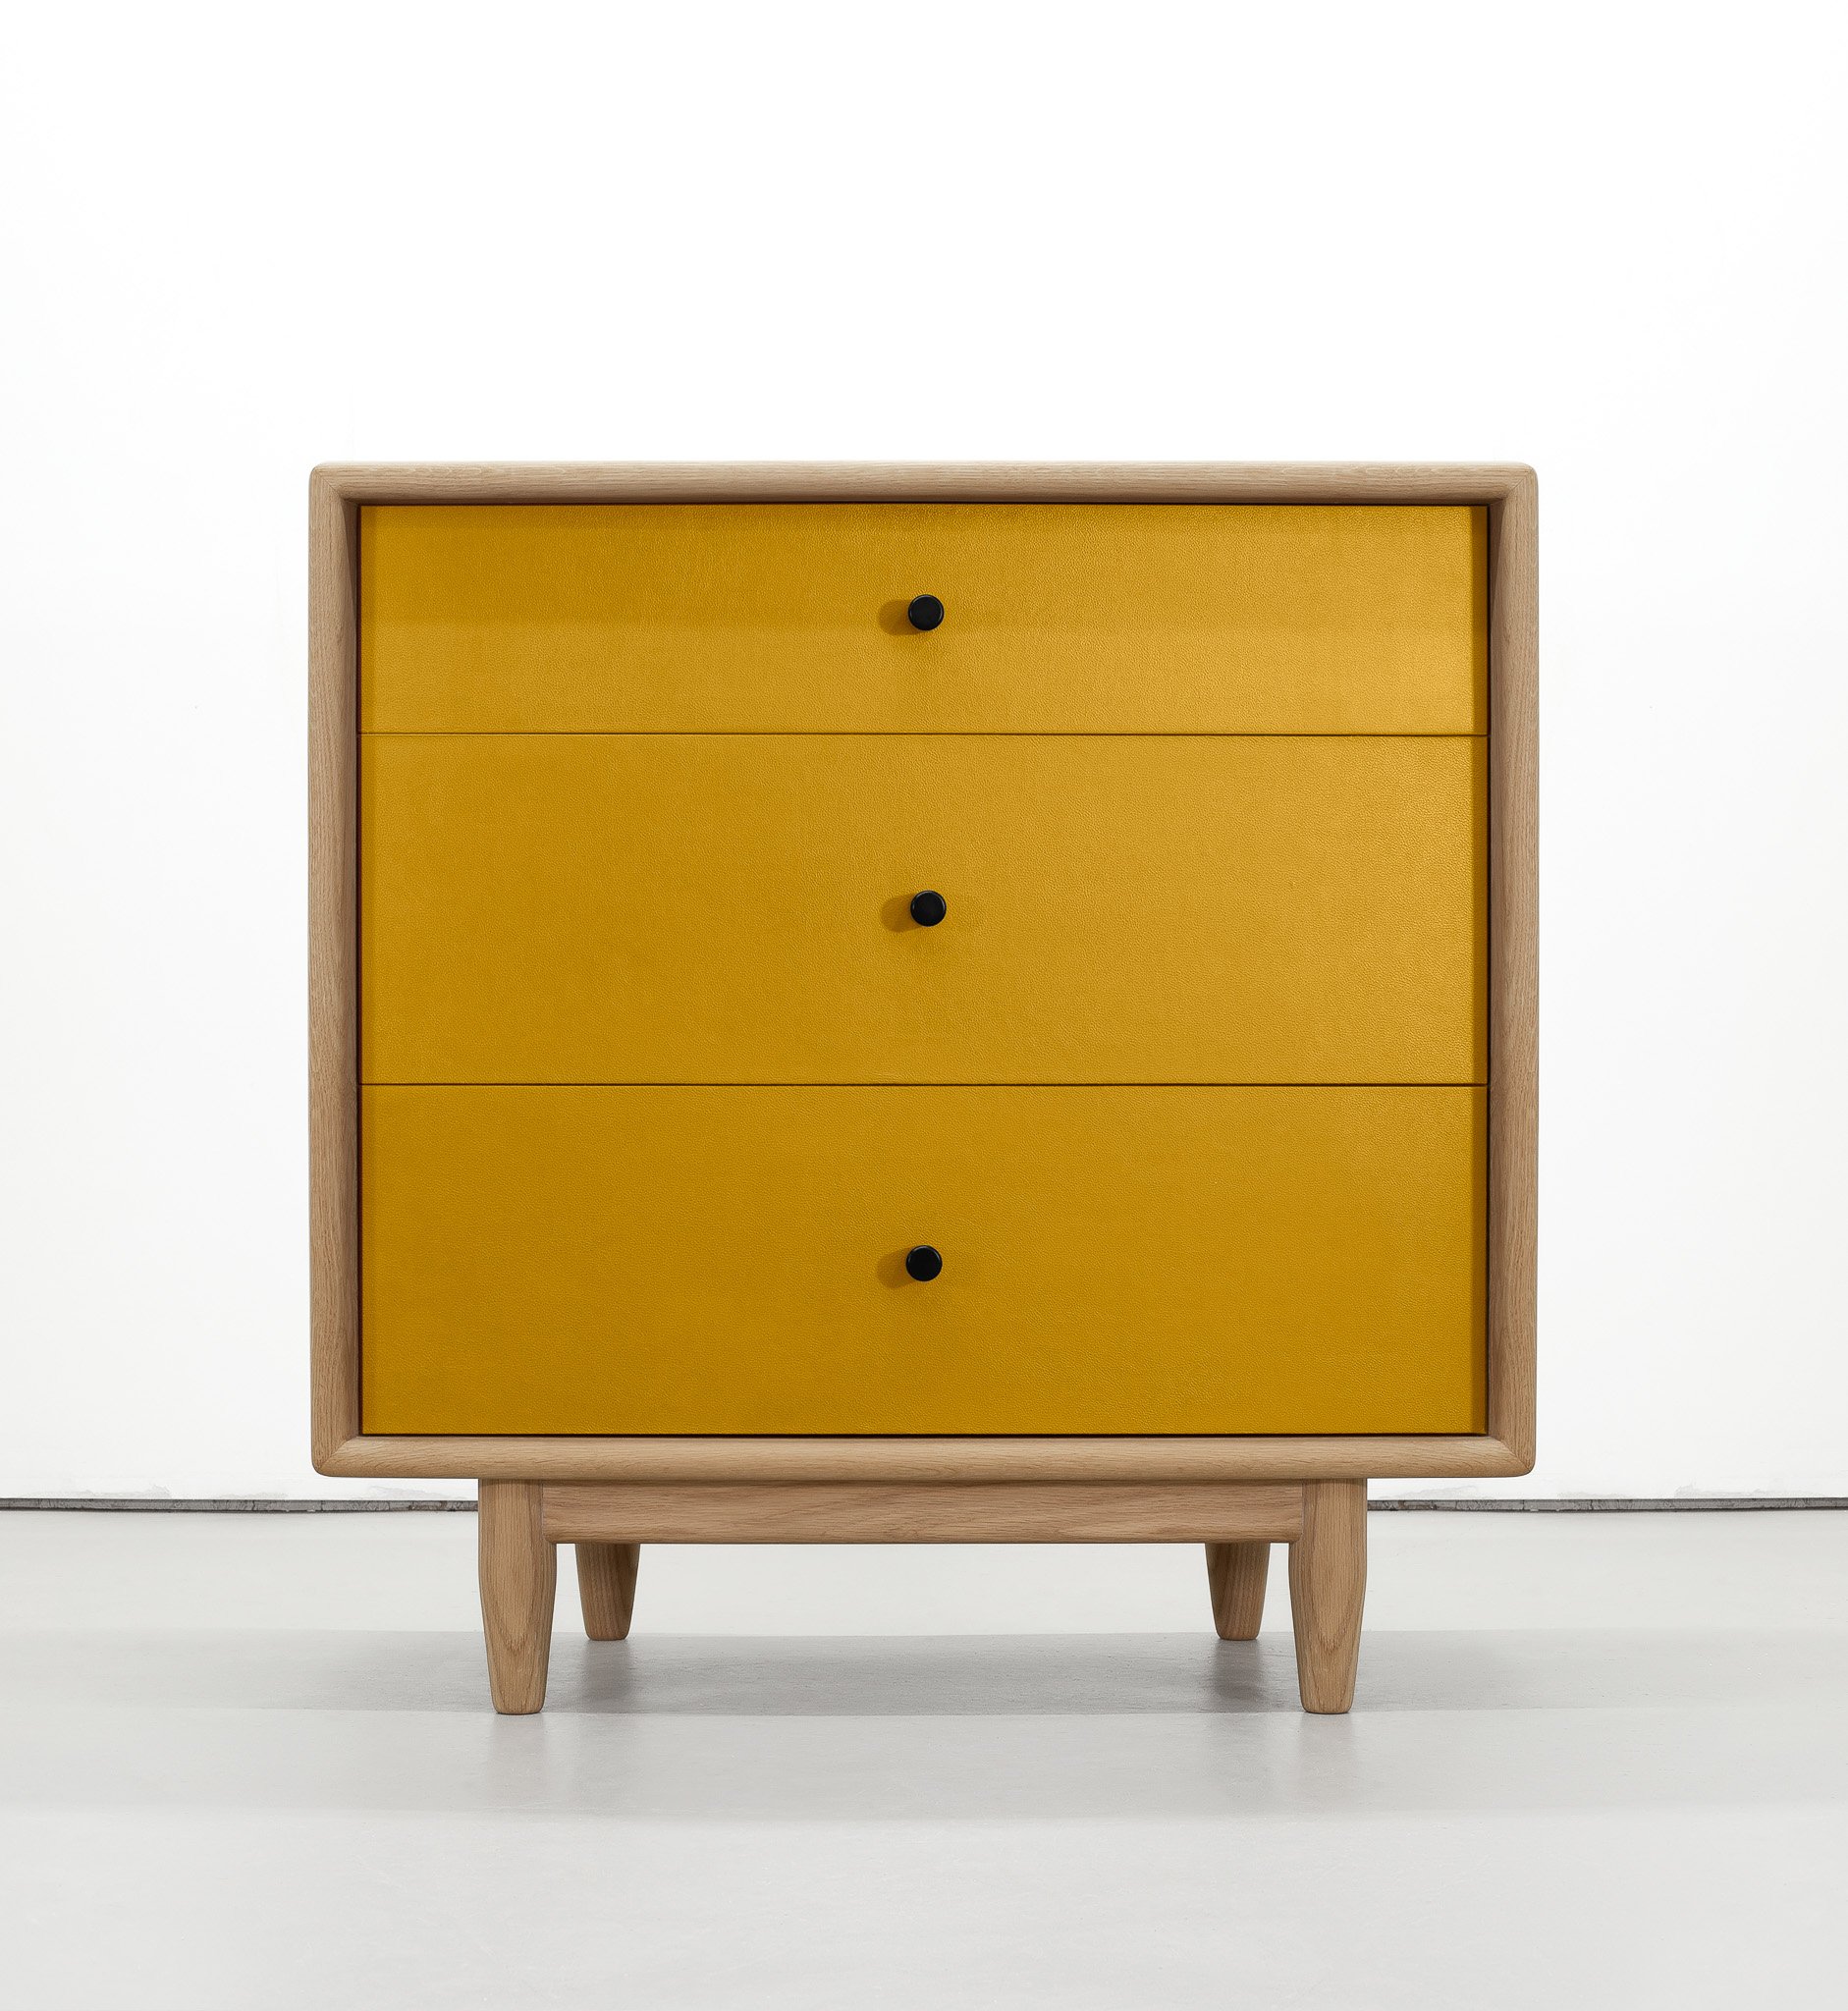 3 Drawer Dresser - $2300